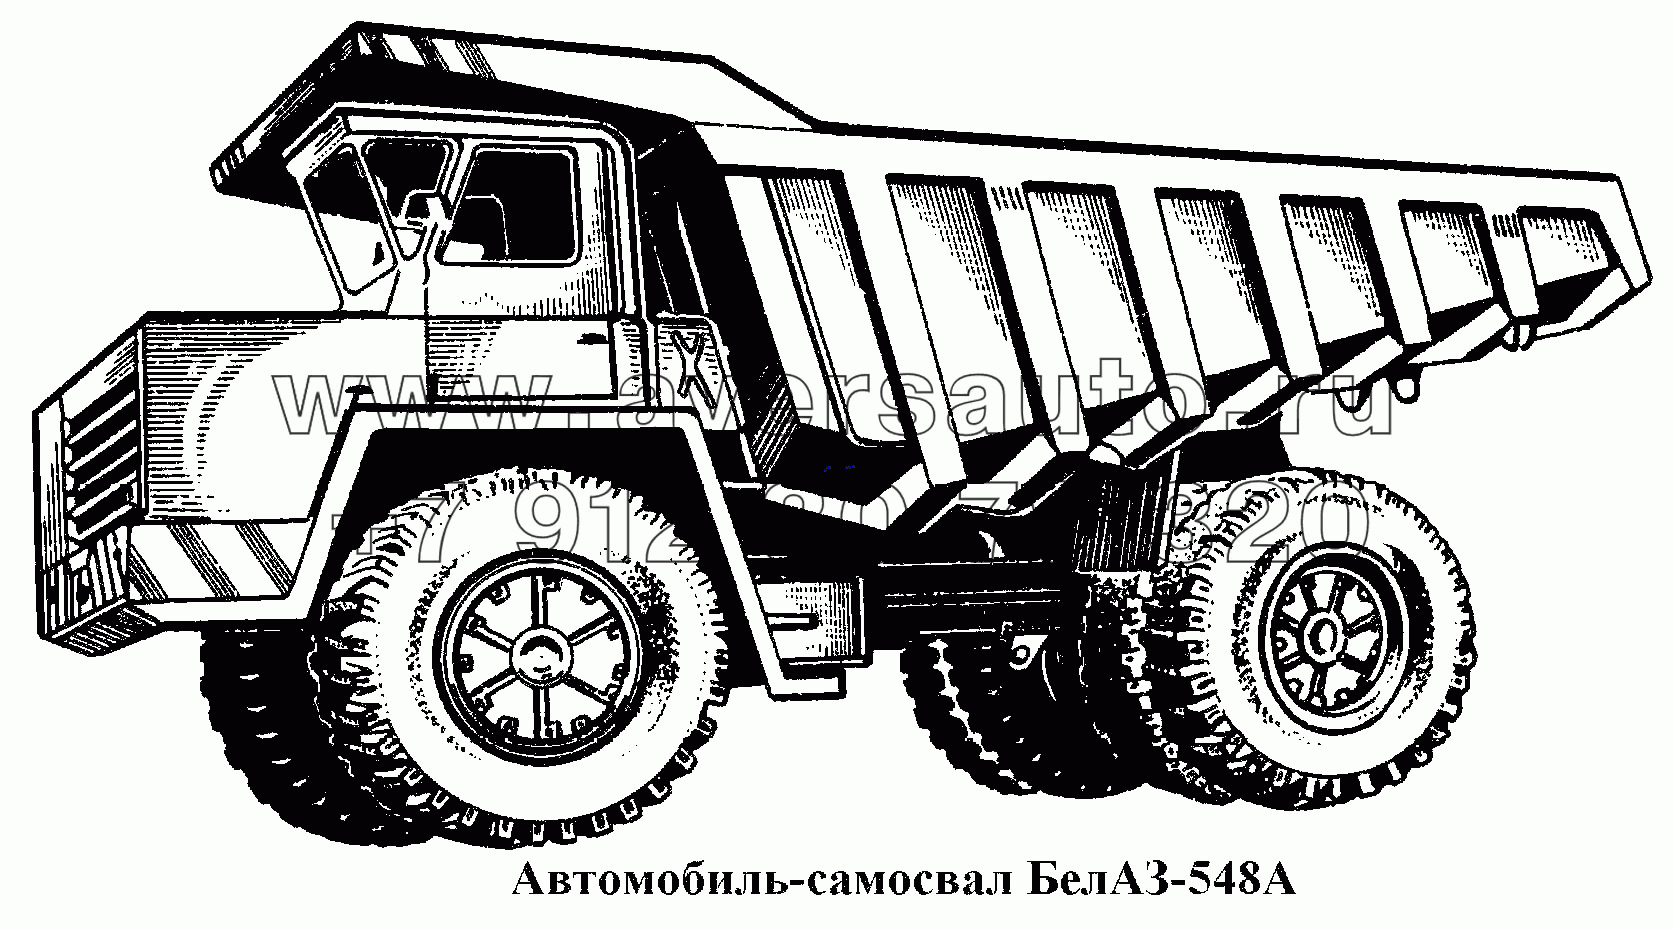 Общий вид автомобиля-самосвала БелАЗ-548А